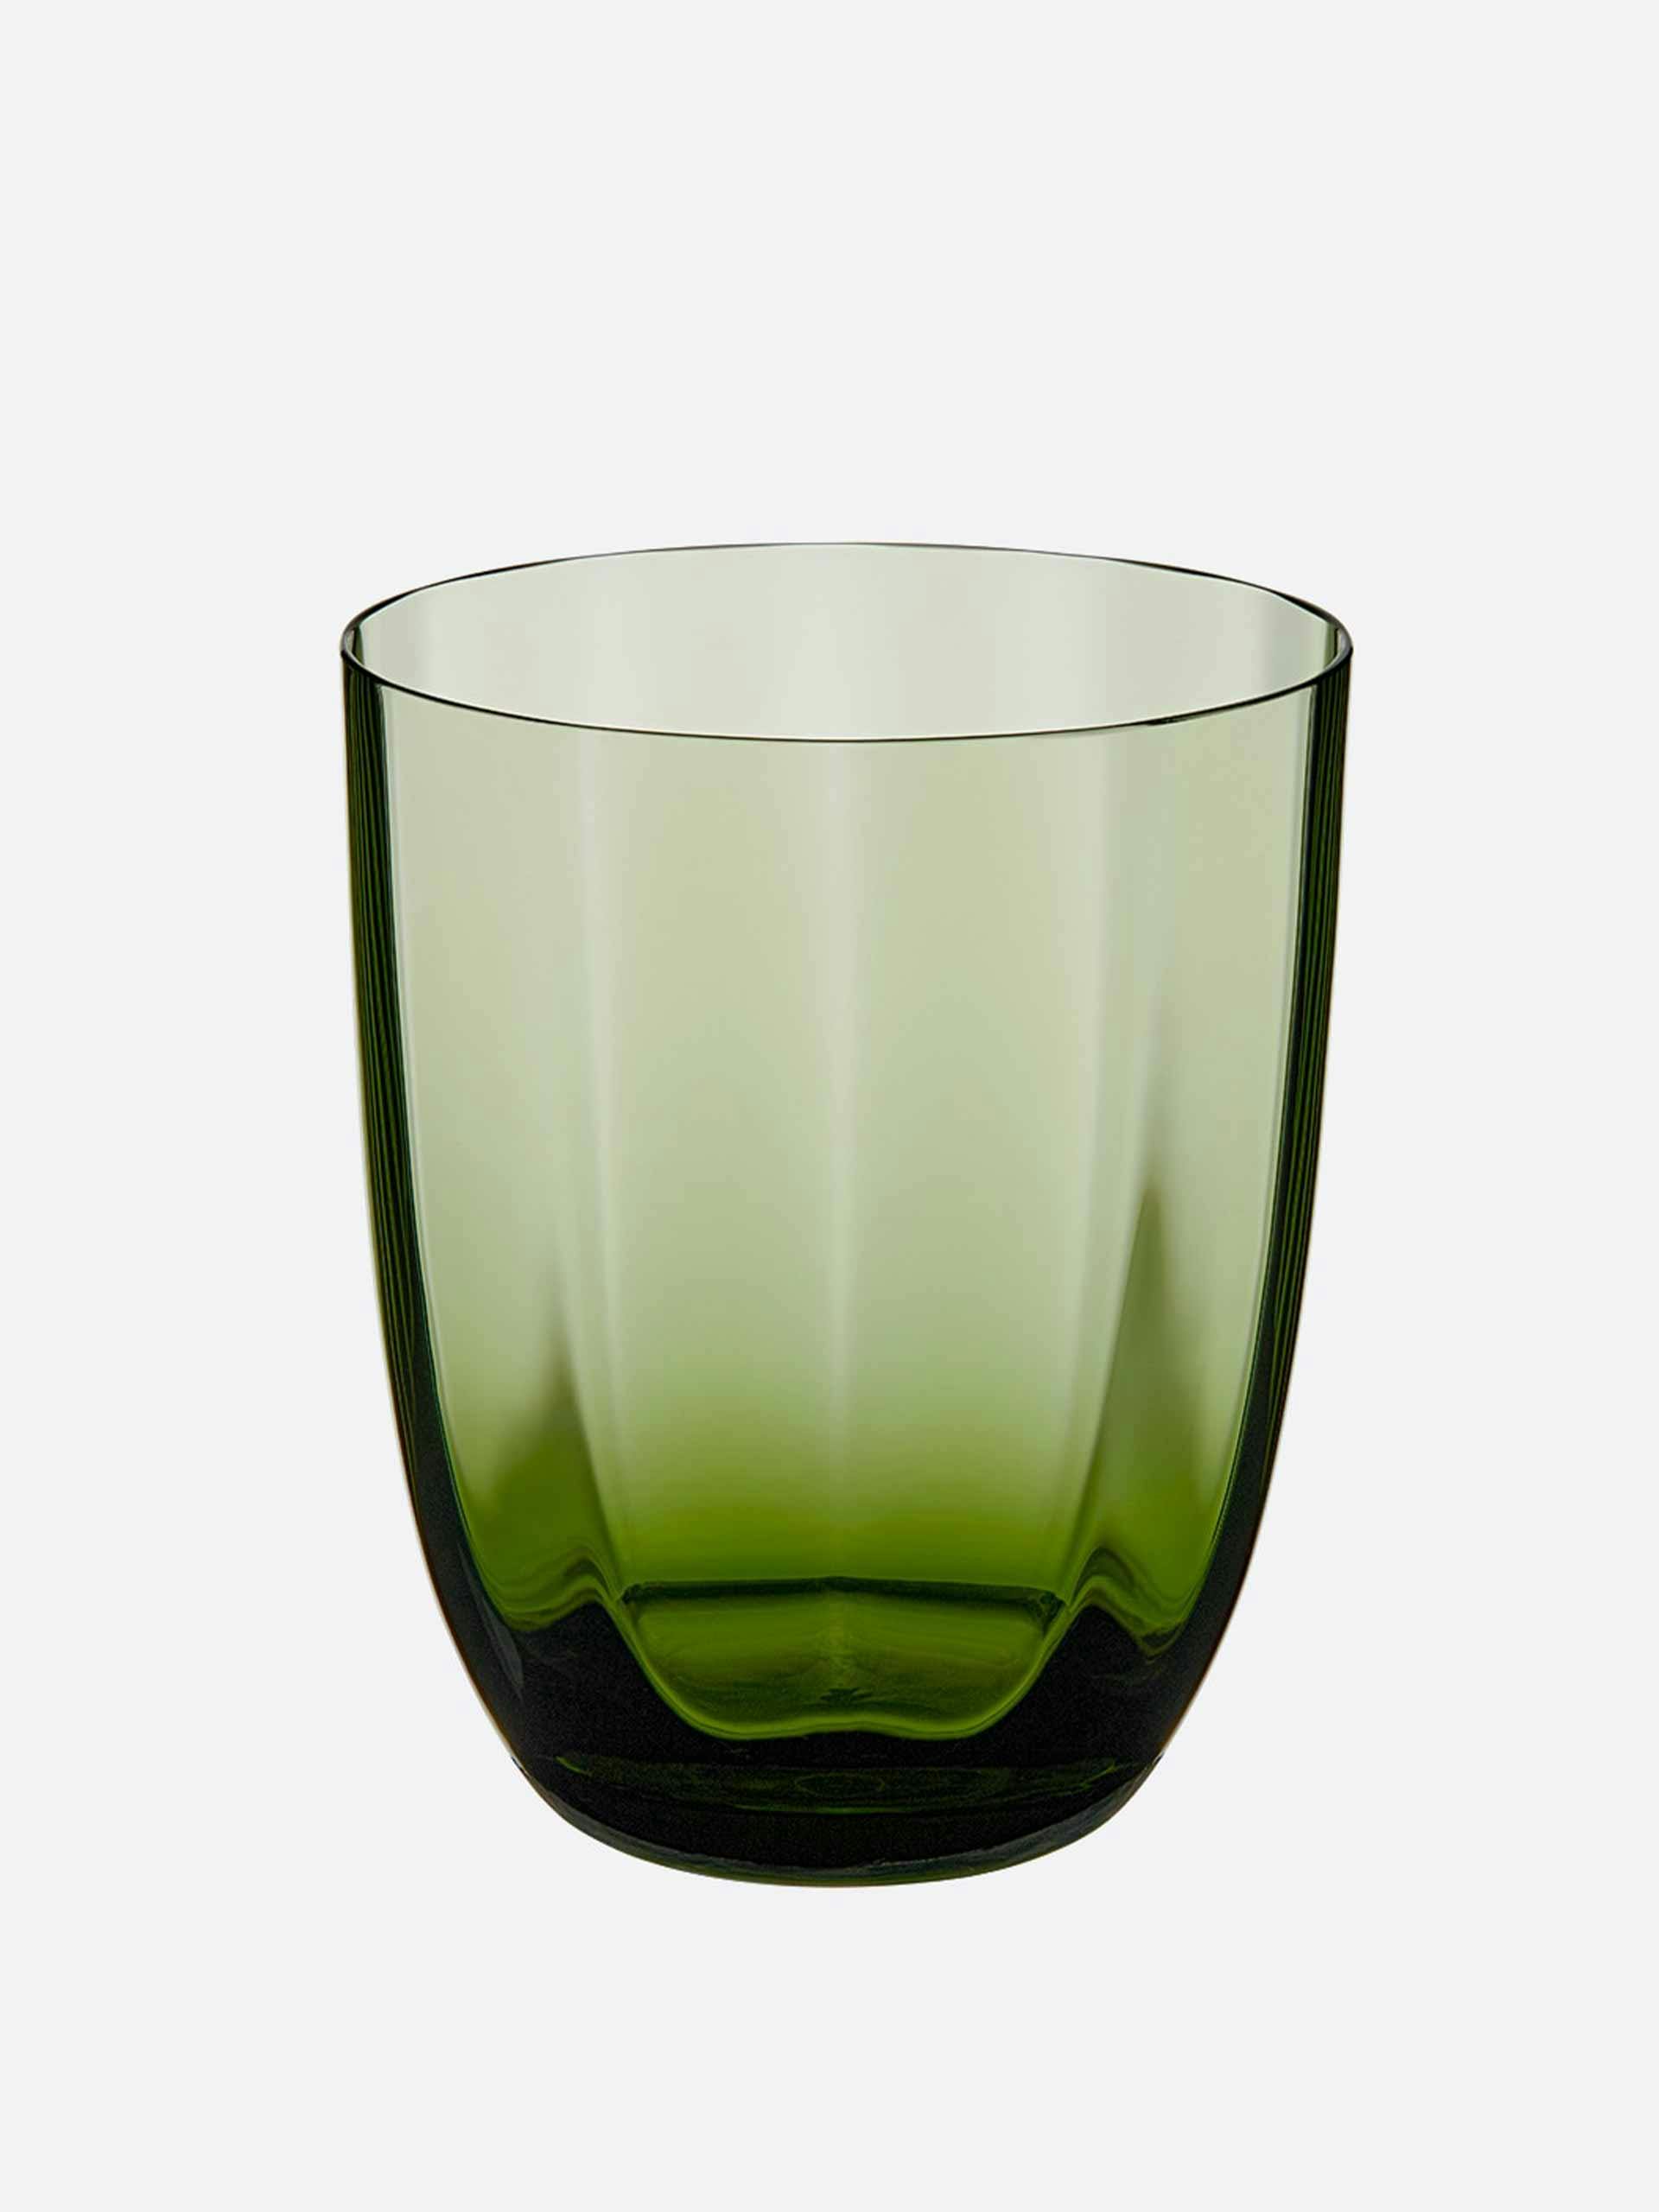 Green glass tumbler